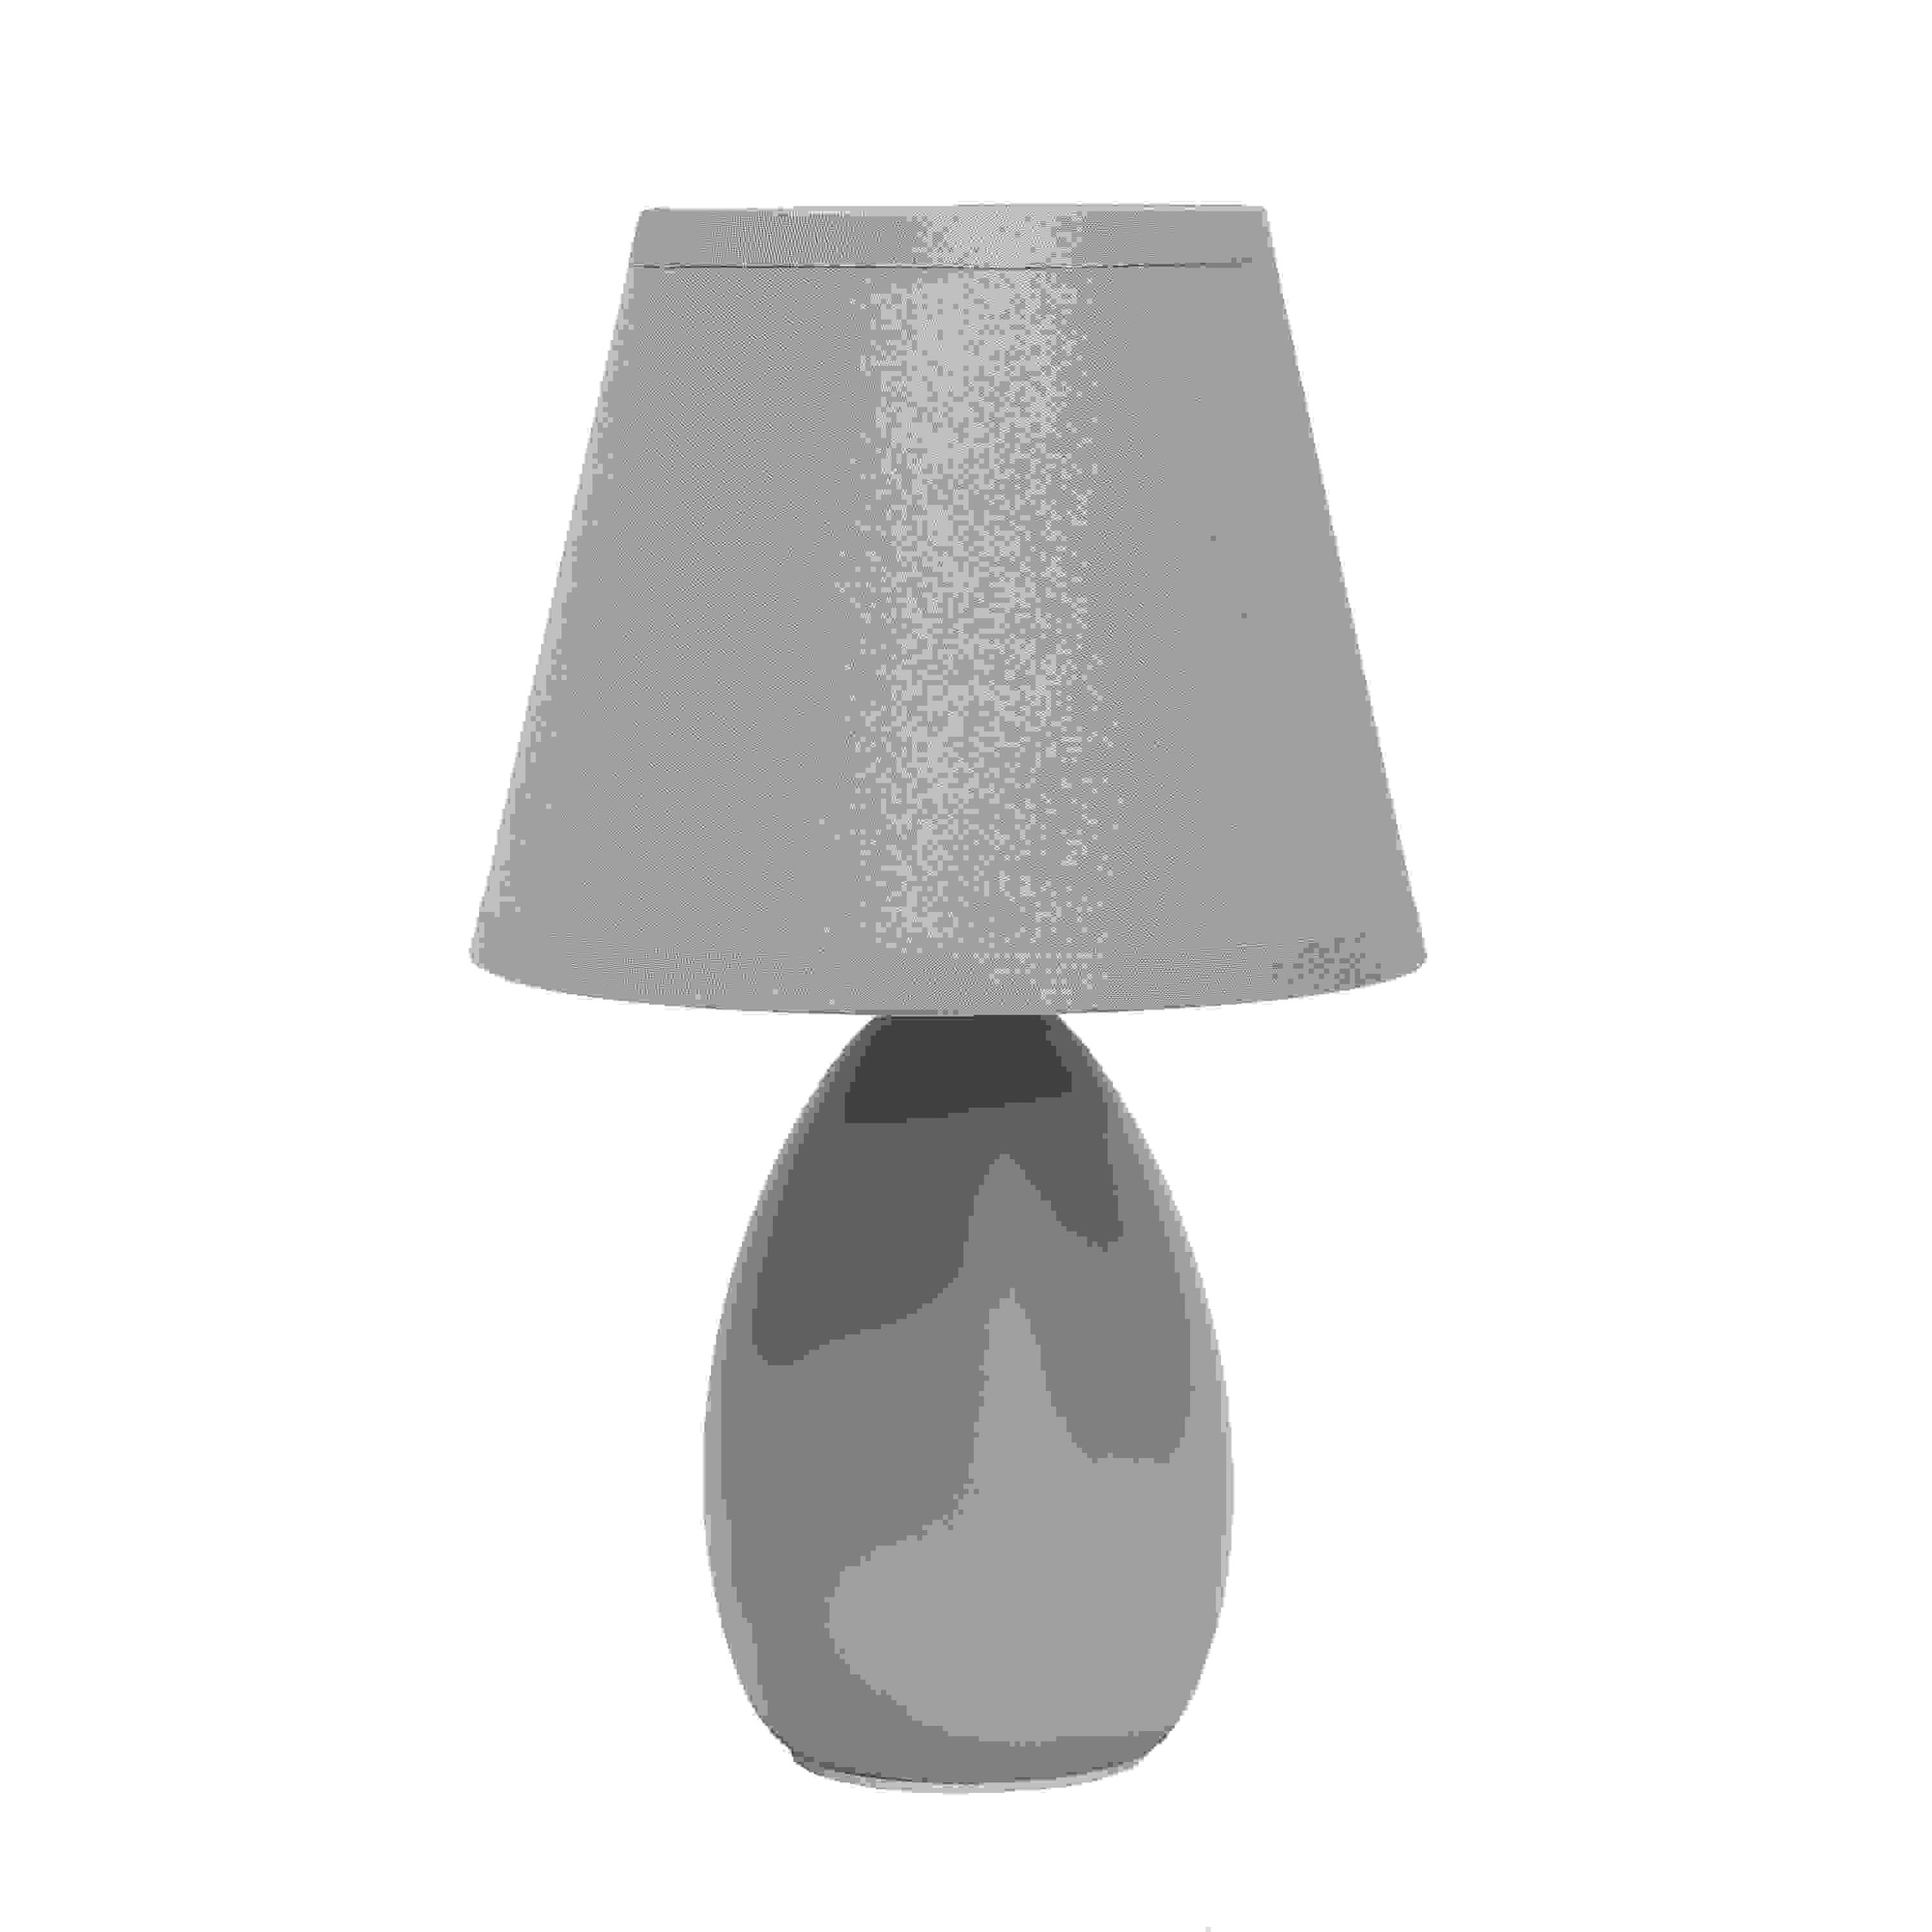 Simple Designs Mini Egg Oval Ceramic Table Lamp, Gray